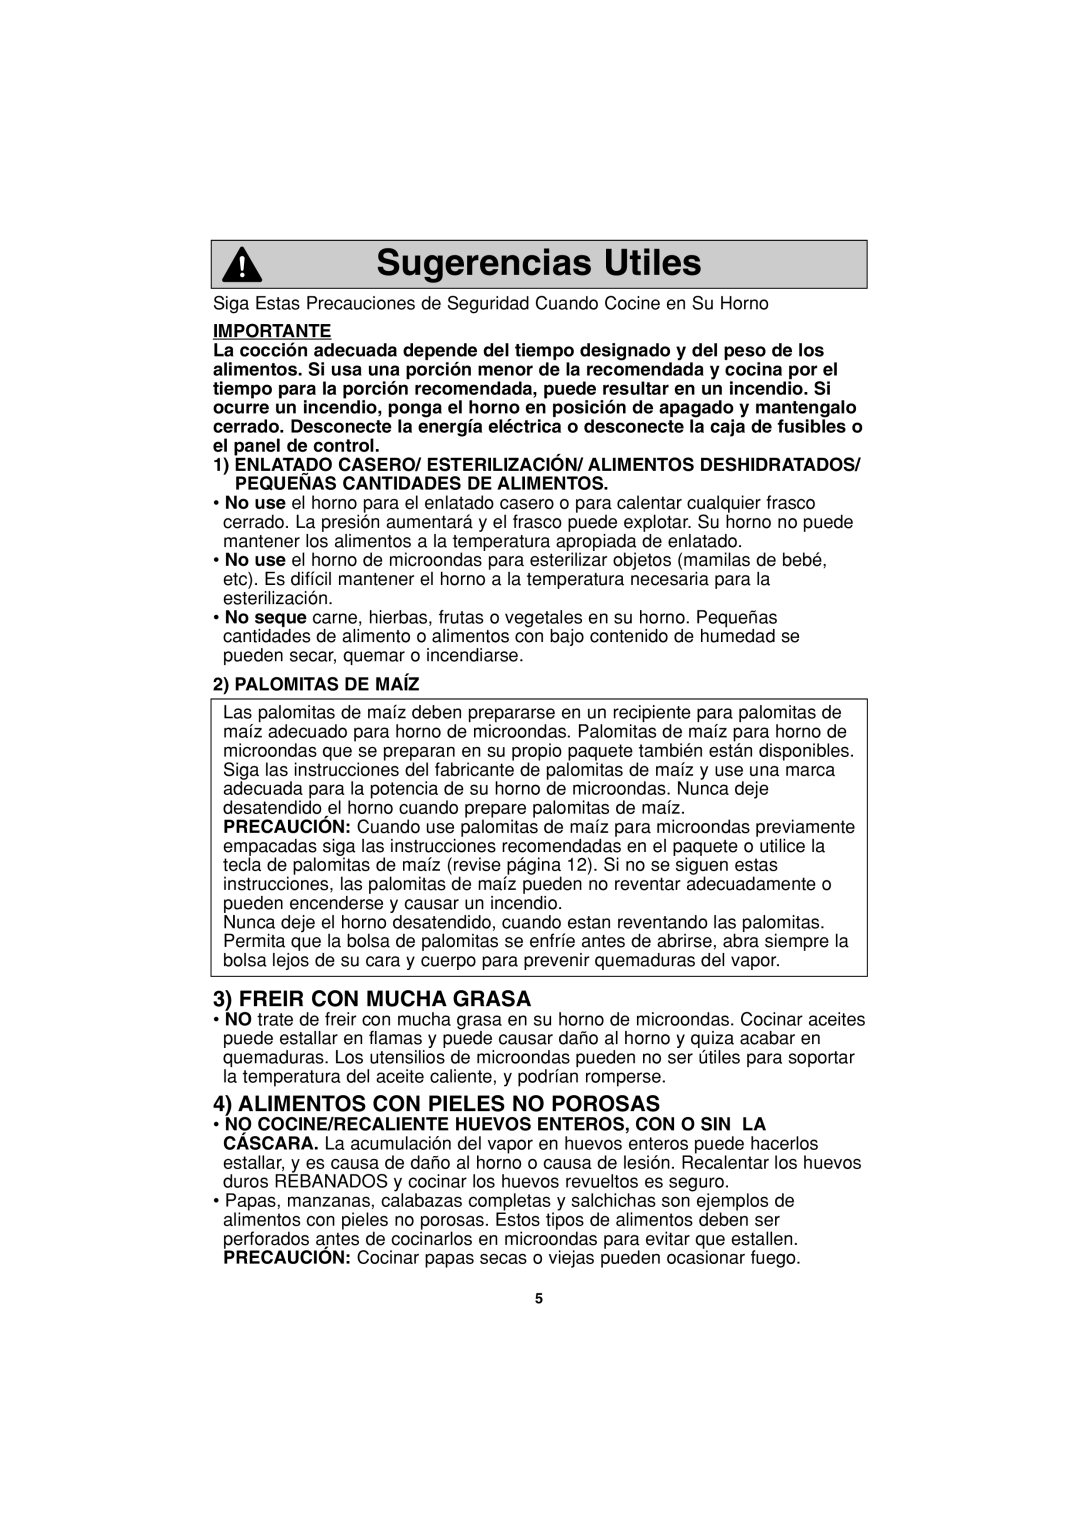 Panasonic NN-S423 important safety instructions Sugerencias Utiles, Freir Con Mucha Grasa, Alimentos Con Pieles No Porosas 